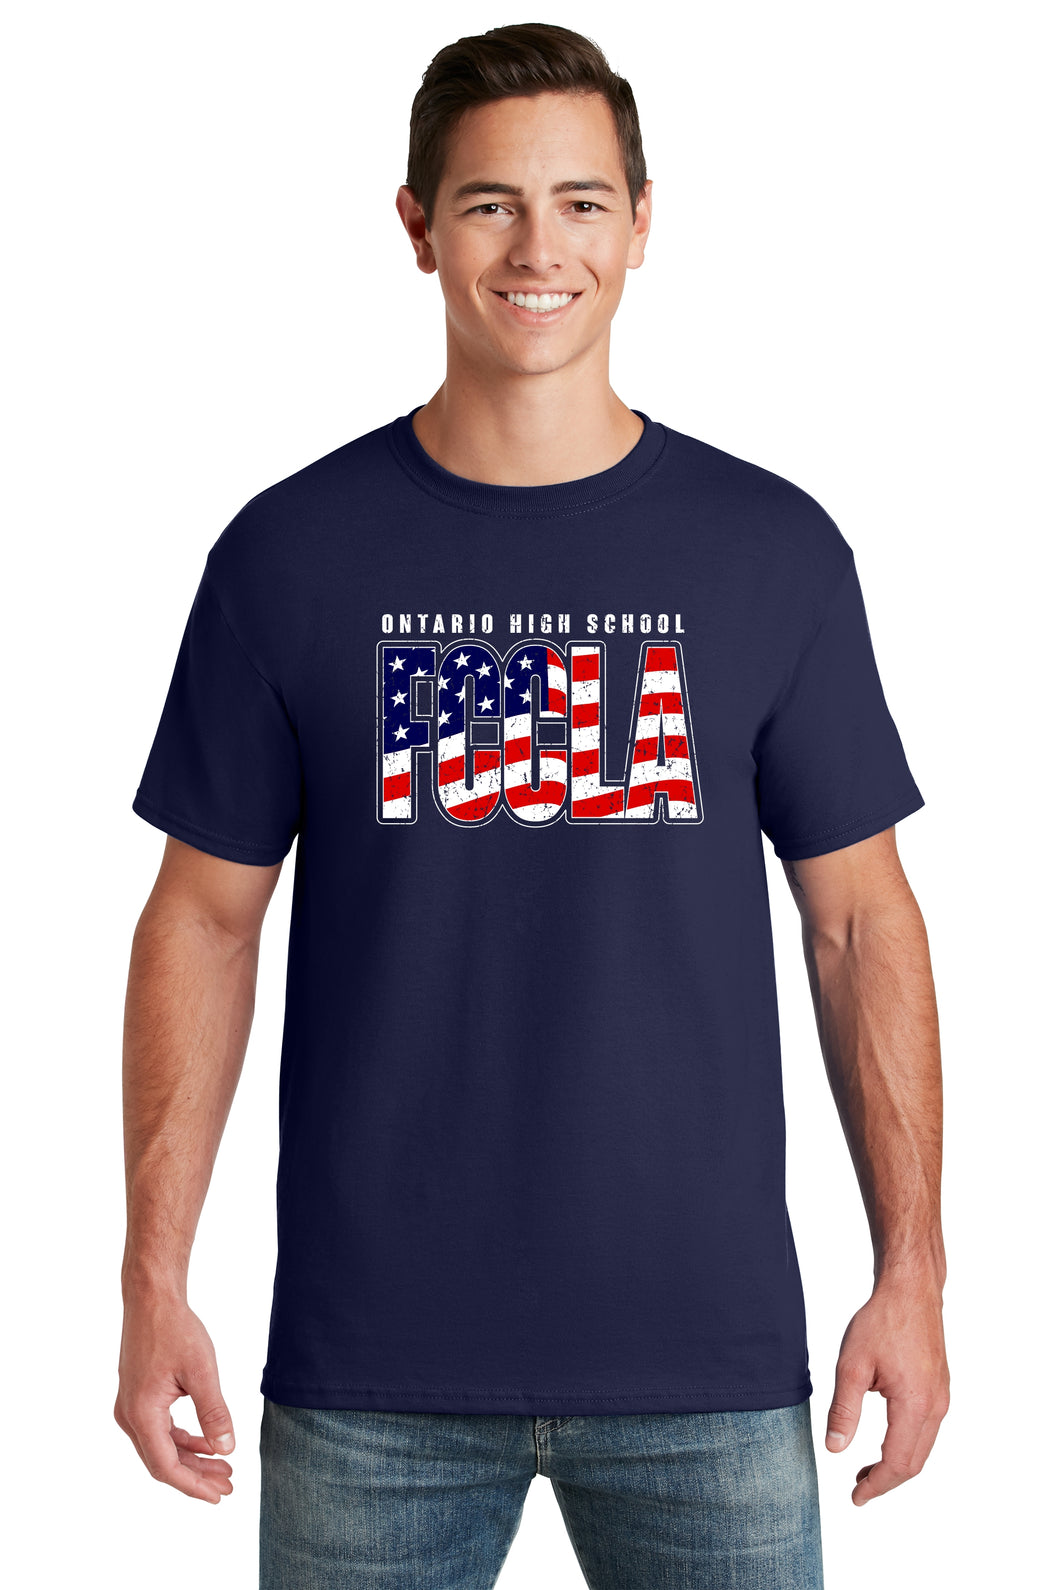 Ontario FCCLA T-shirt - American Flag Design